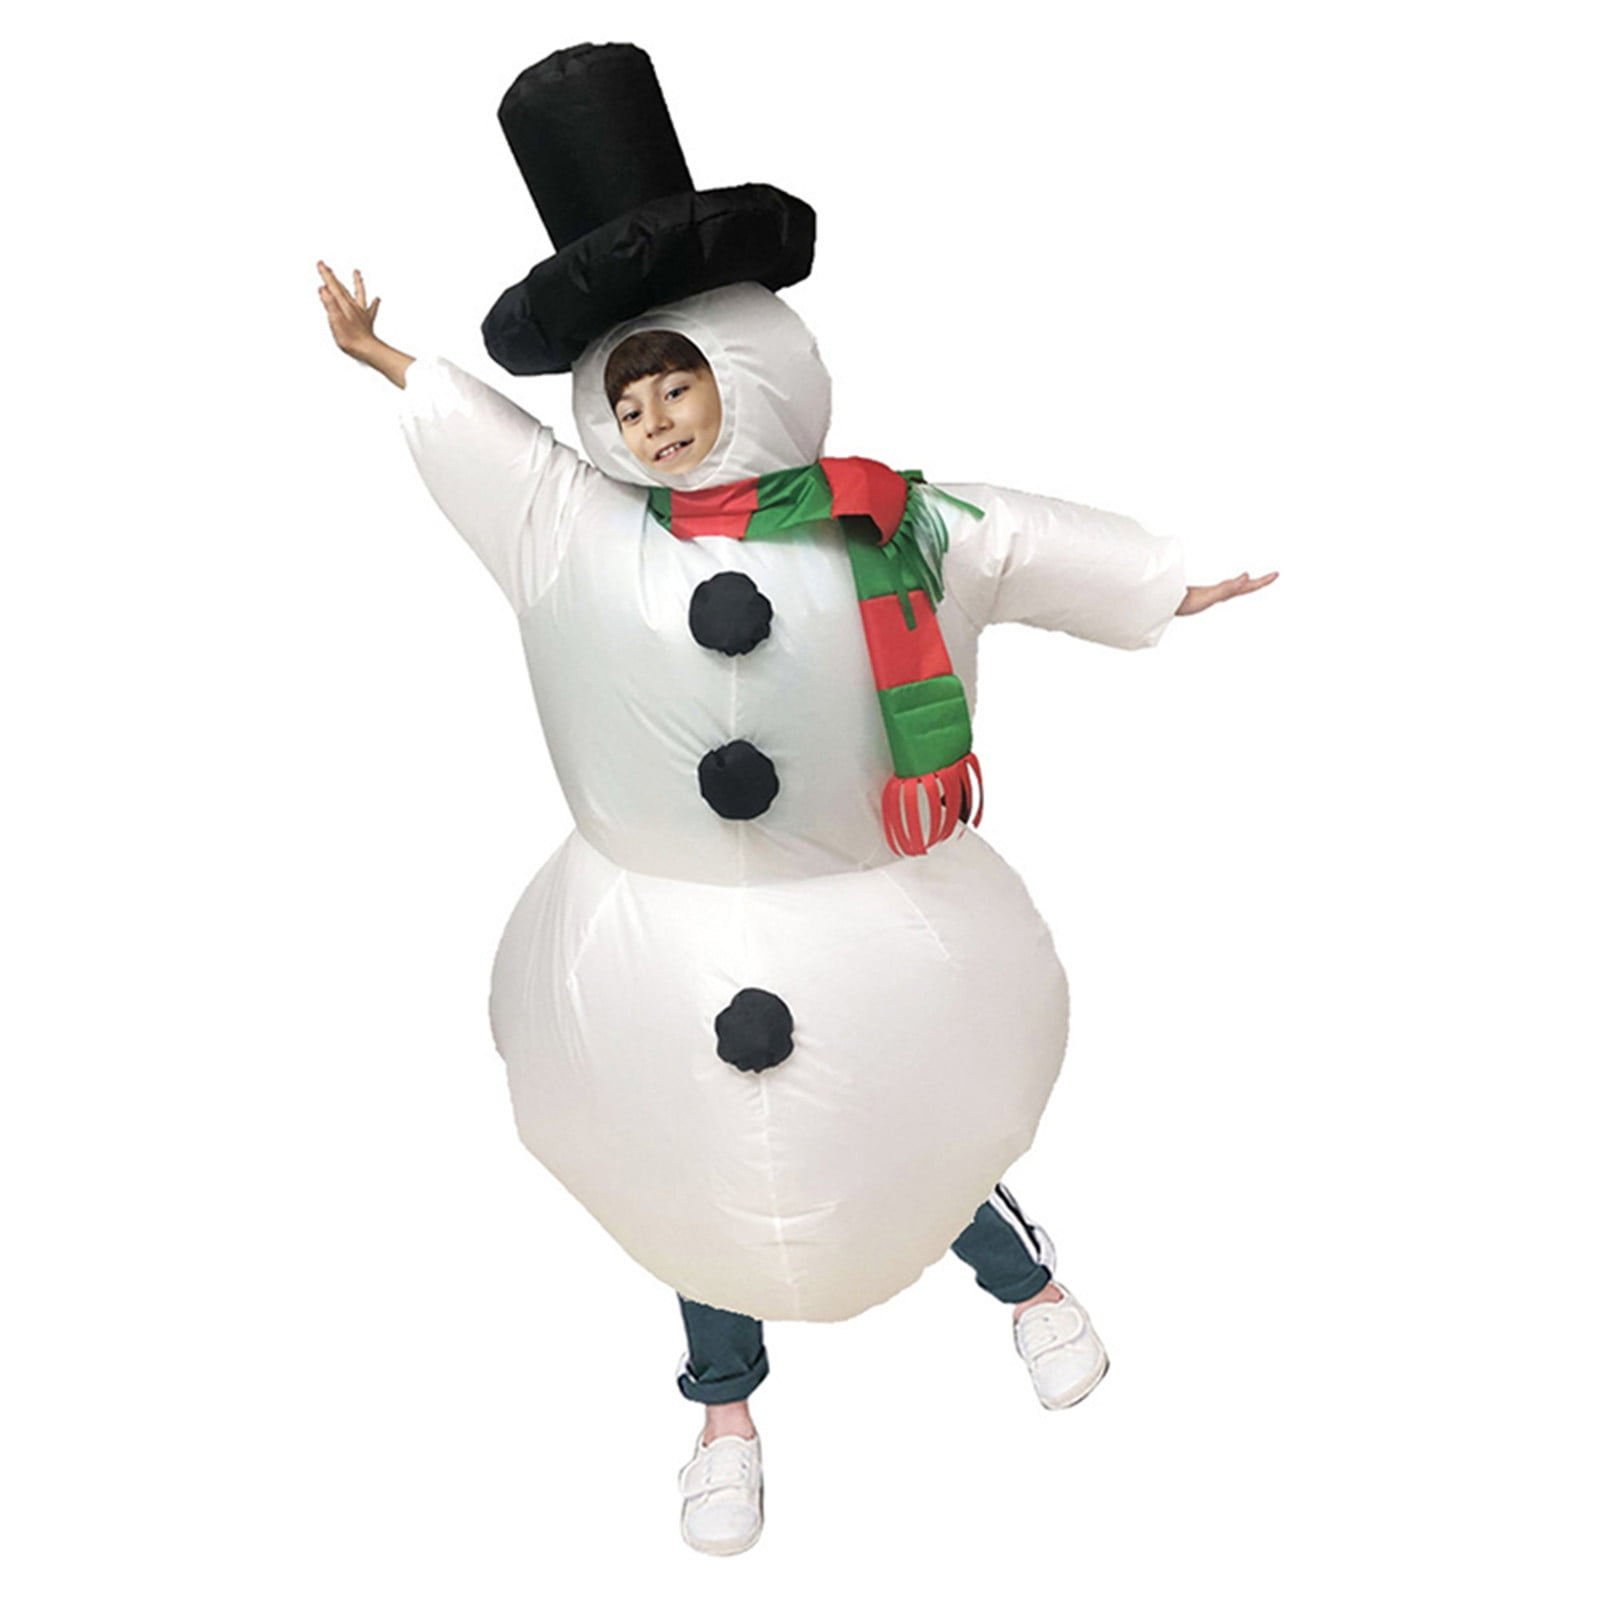 CHRISTMAS SNOWMAN COSTUME 4 PIECE SET FANCY DRESS ACCESSORY KIT MOVIE CHARACTER 